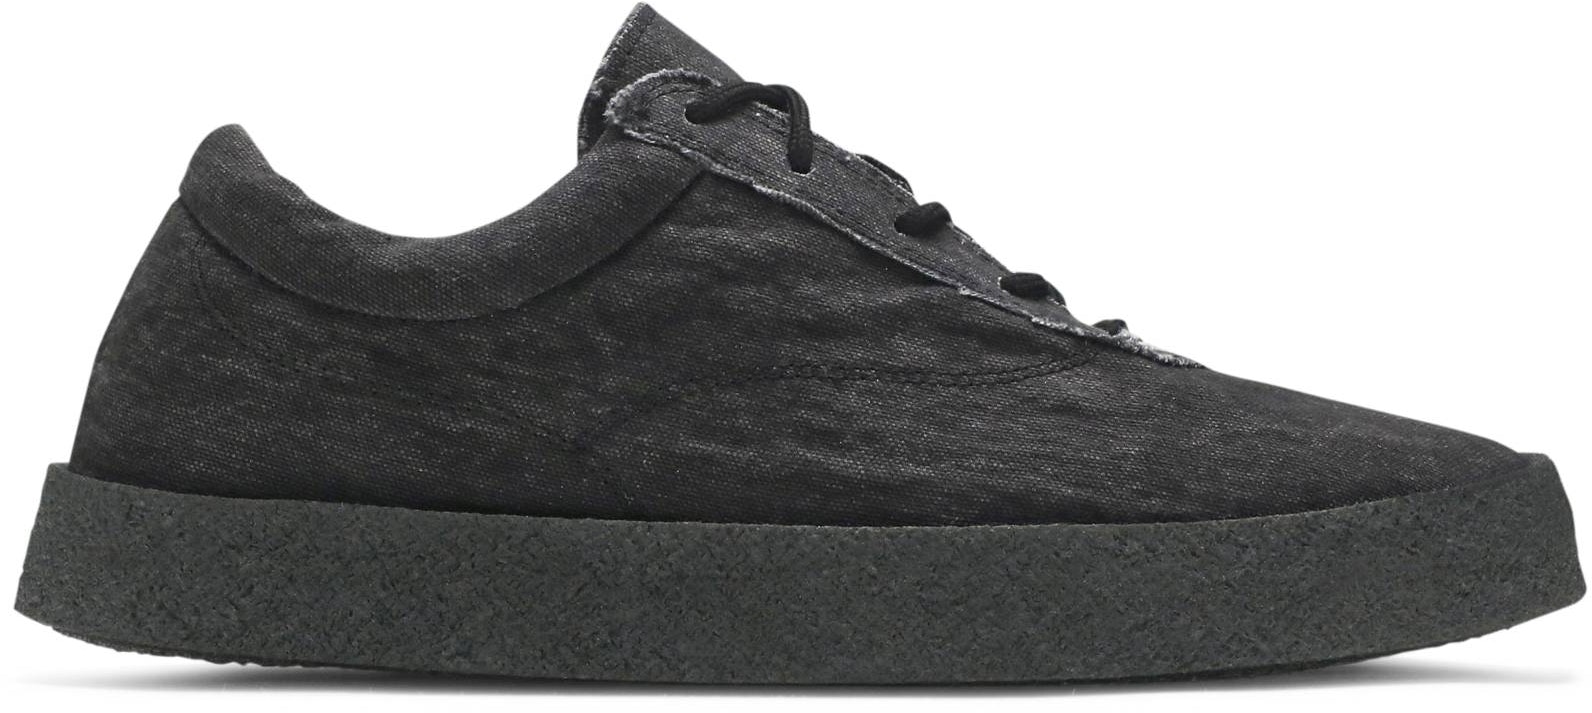 Yeezy Season 6 Washed Canvas Crepe Sneaker 'Graphite' KM5003‑113